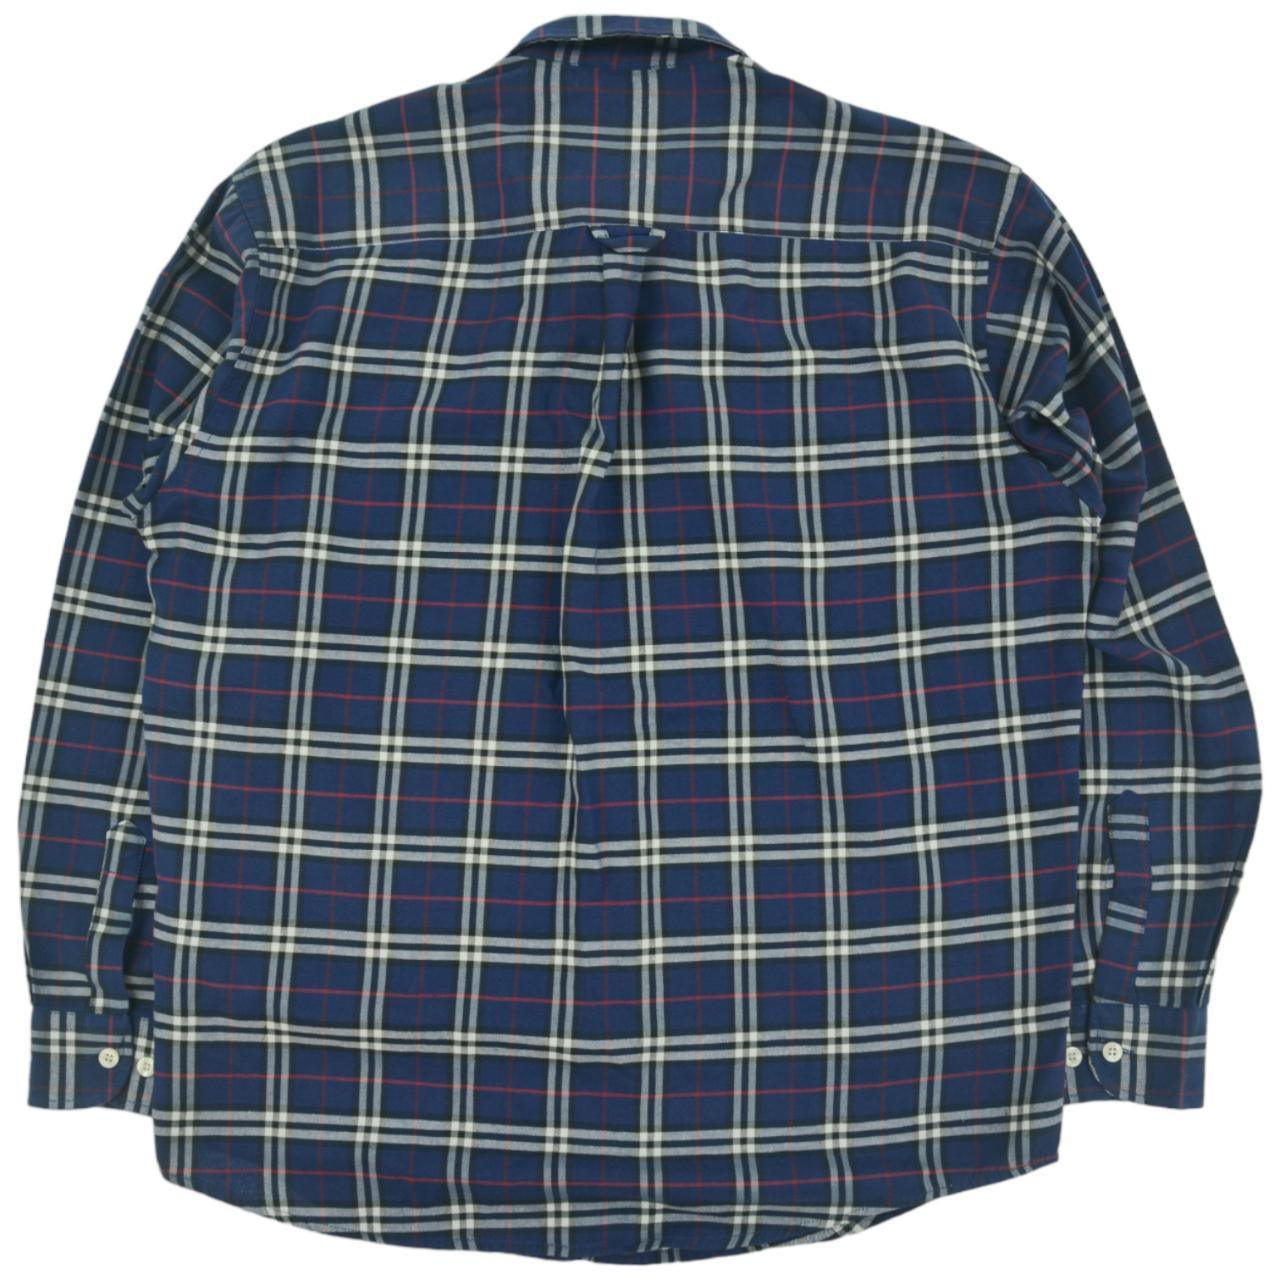 Vintage Burberry Nova Check Shirt Size L - Known Source